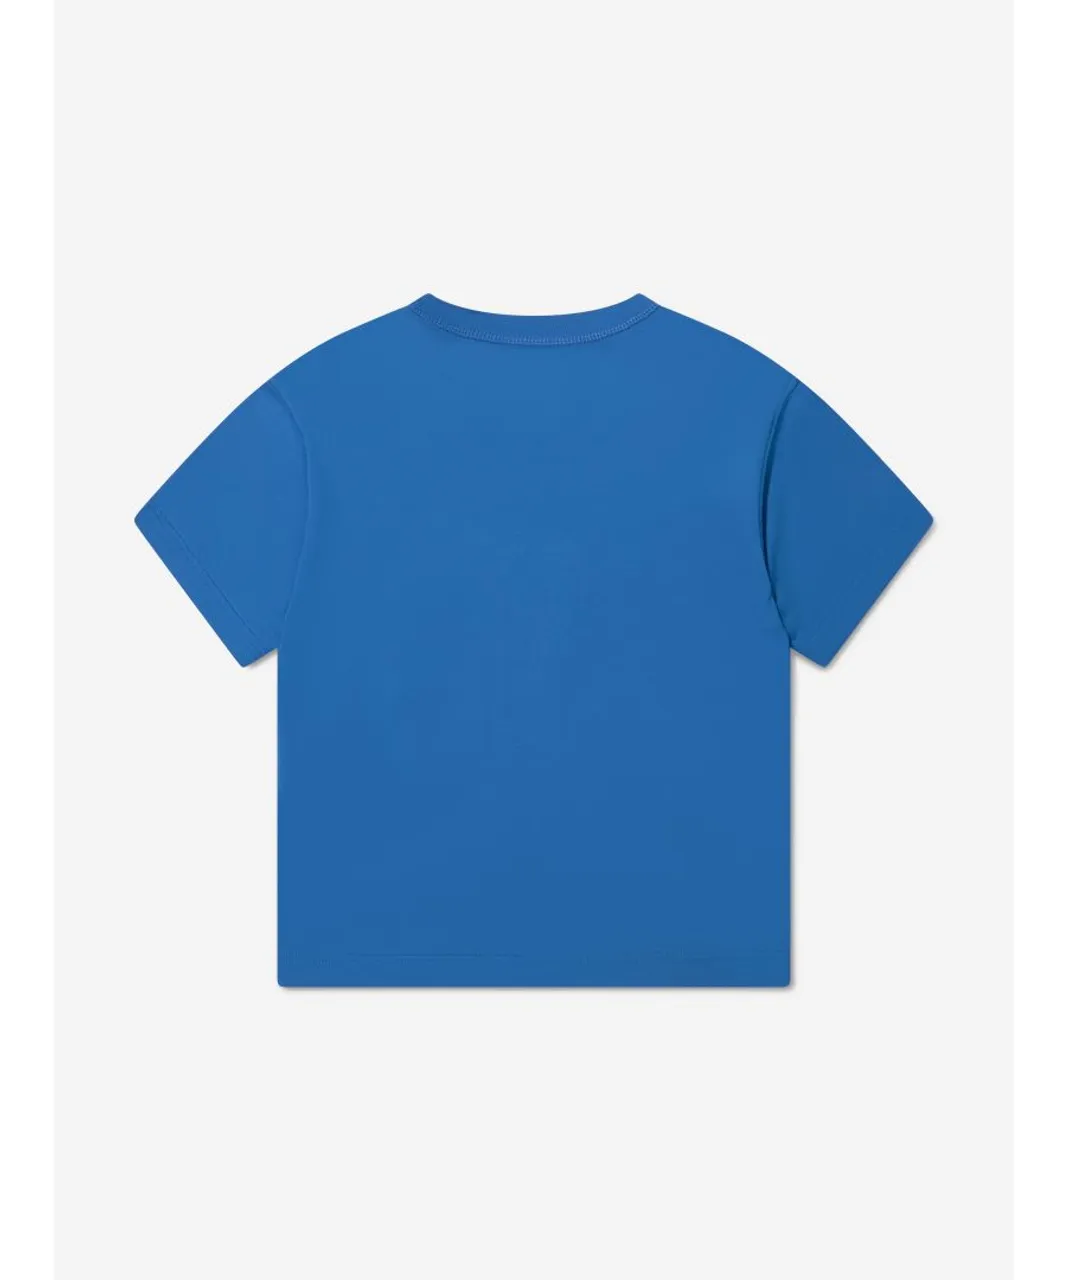 MYAR Boys Cotton Whale Print T-Shirt - Blue